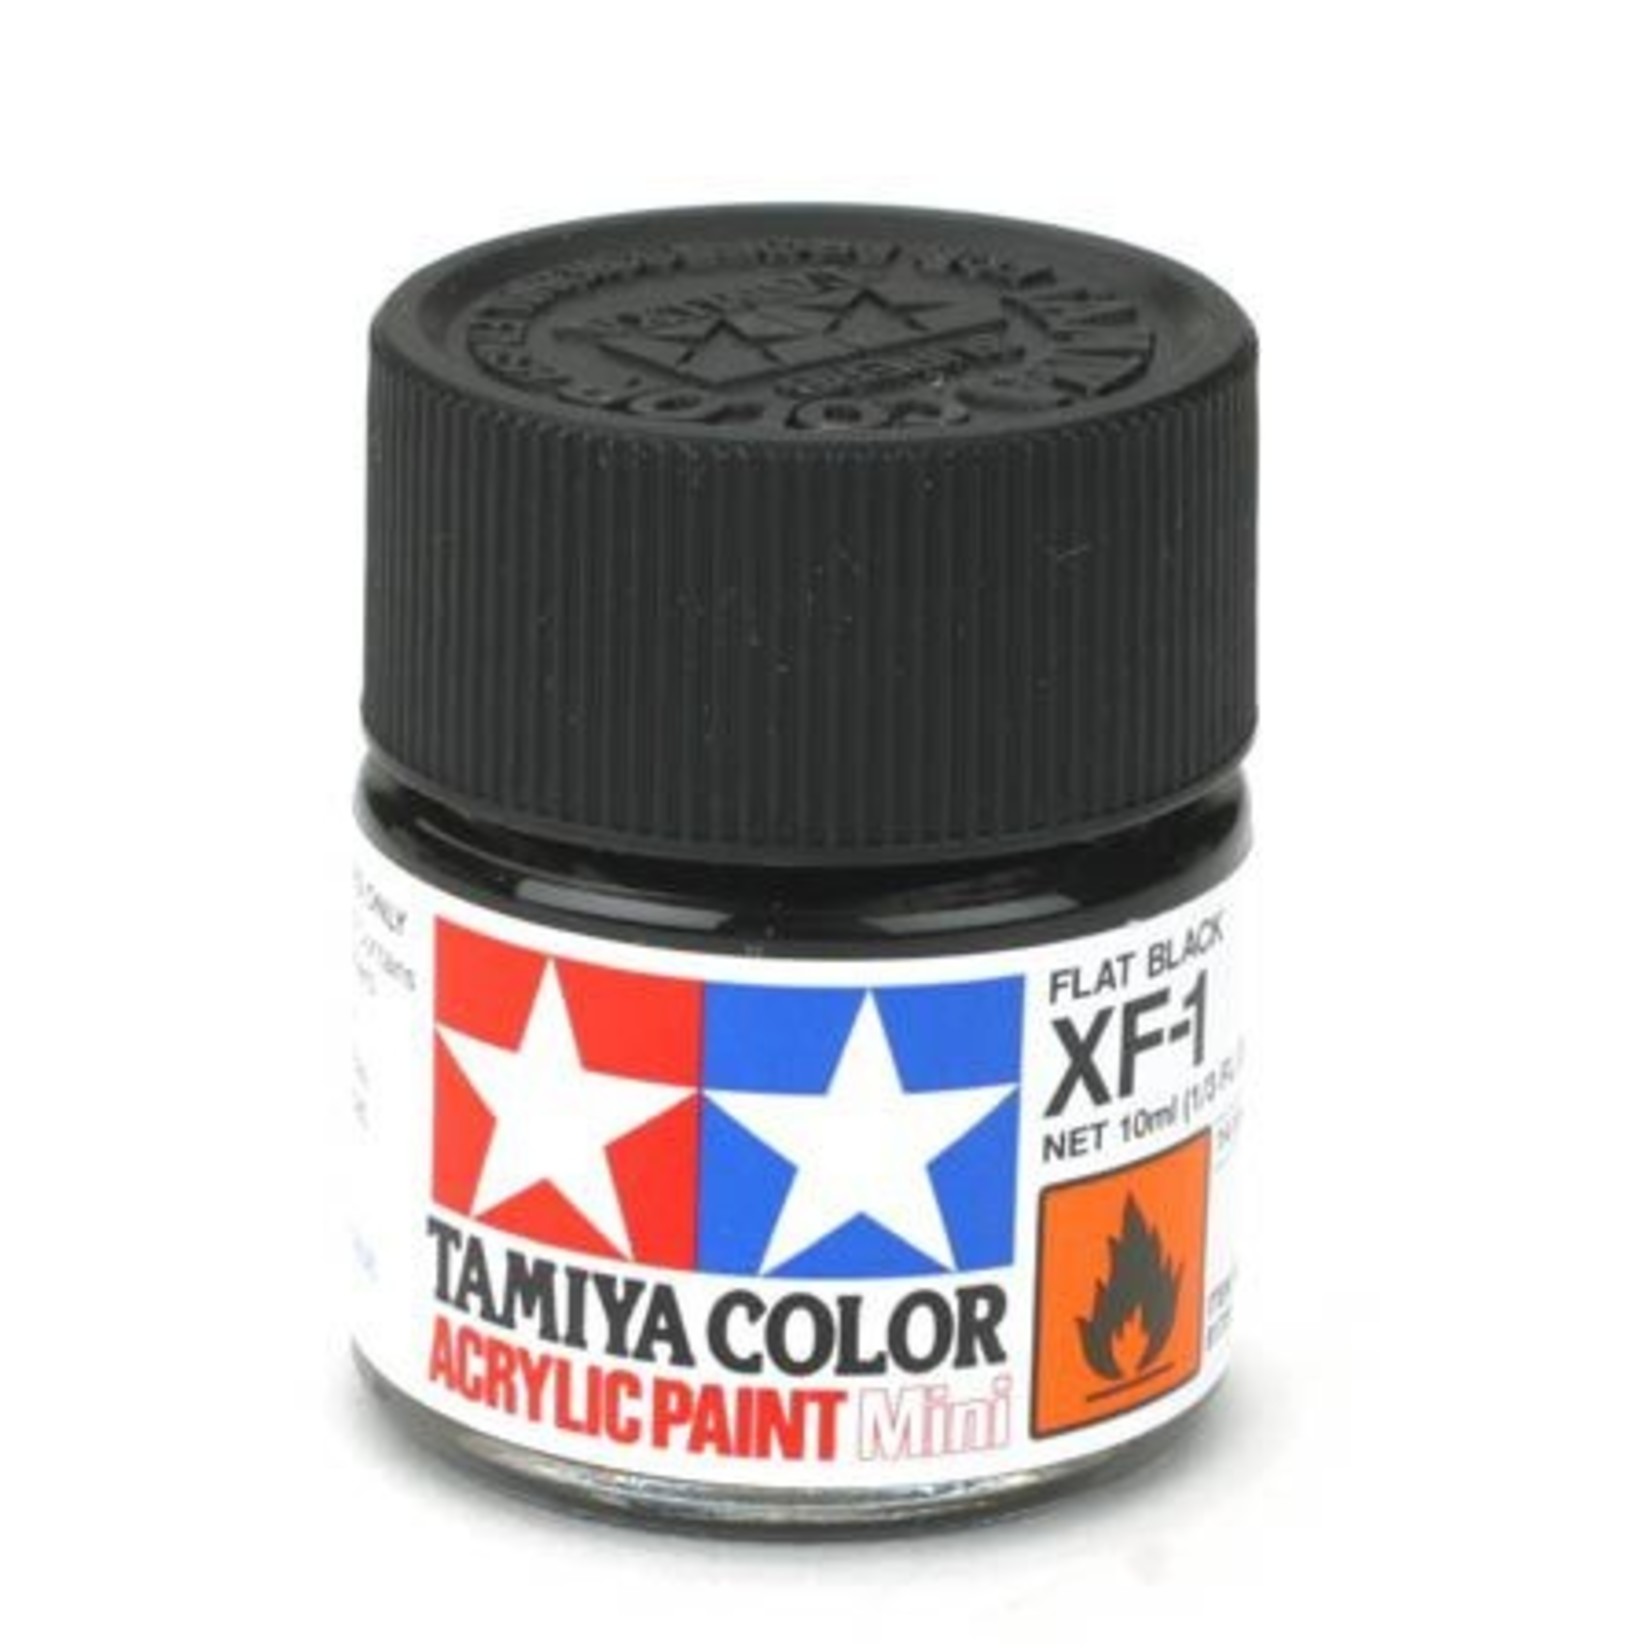 Tamiya Acrylic XF1 Flat Black